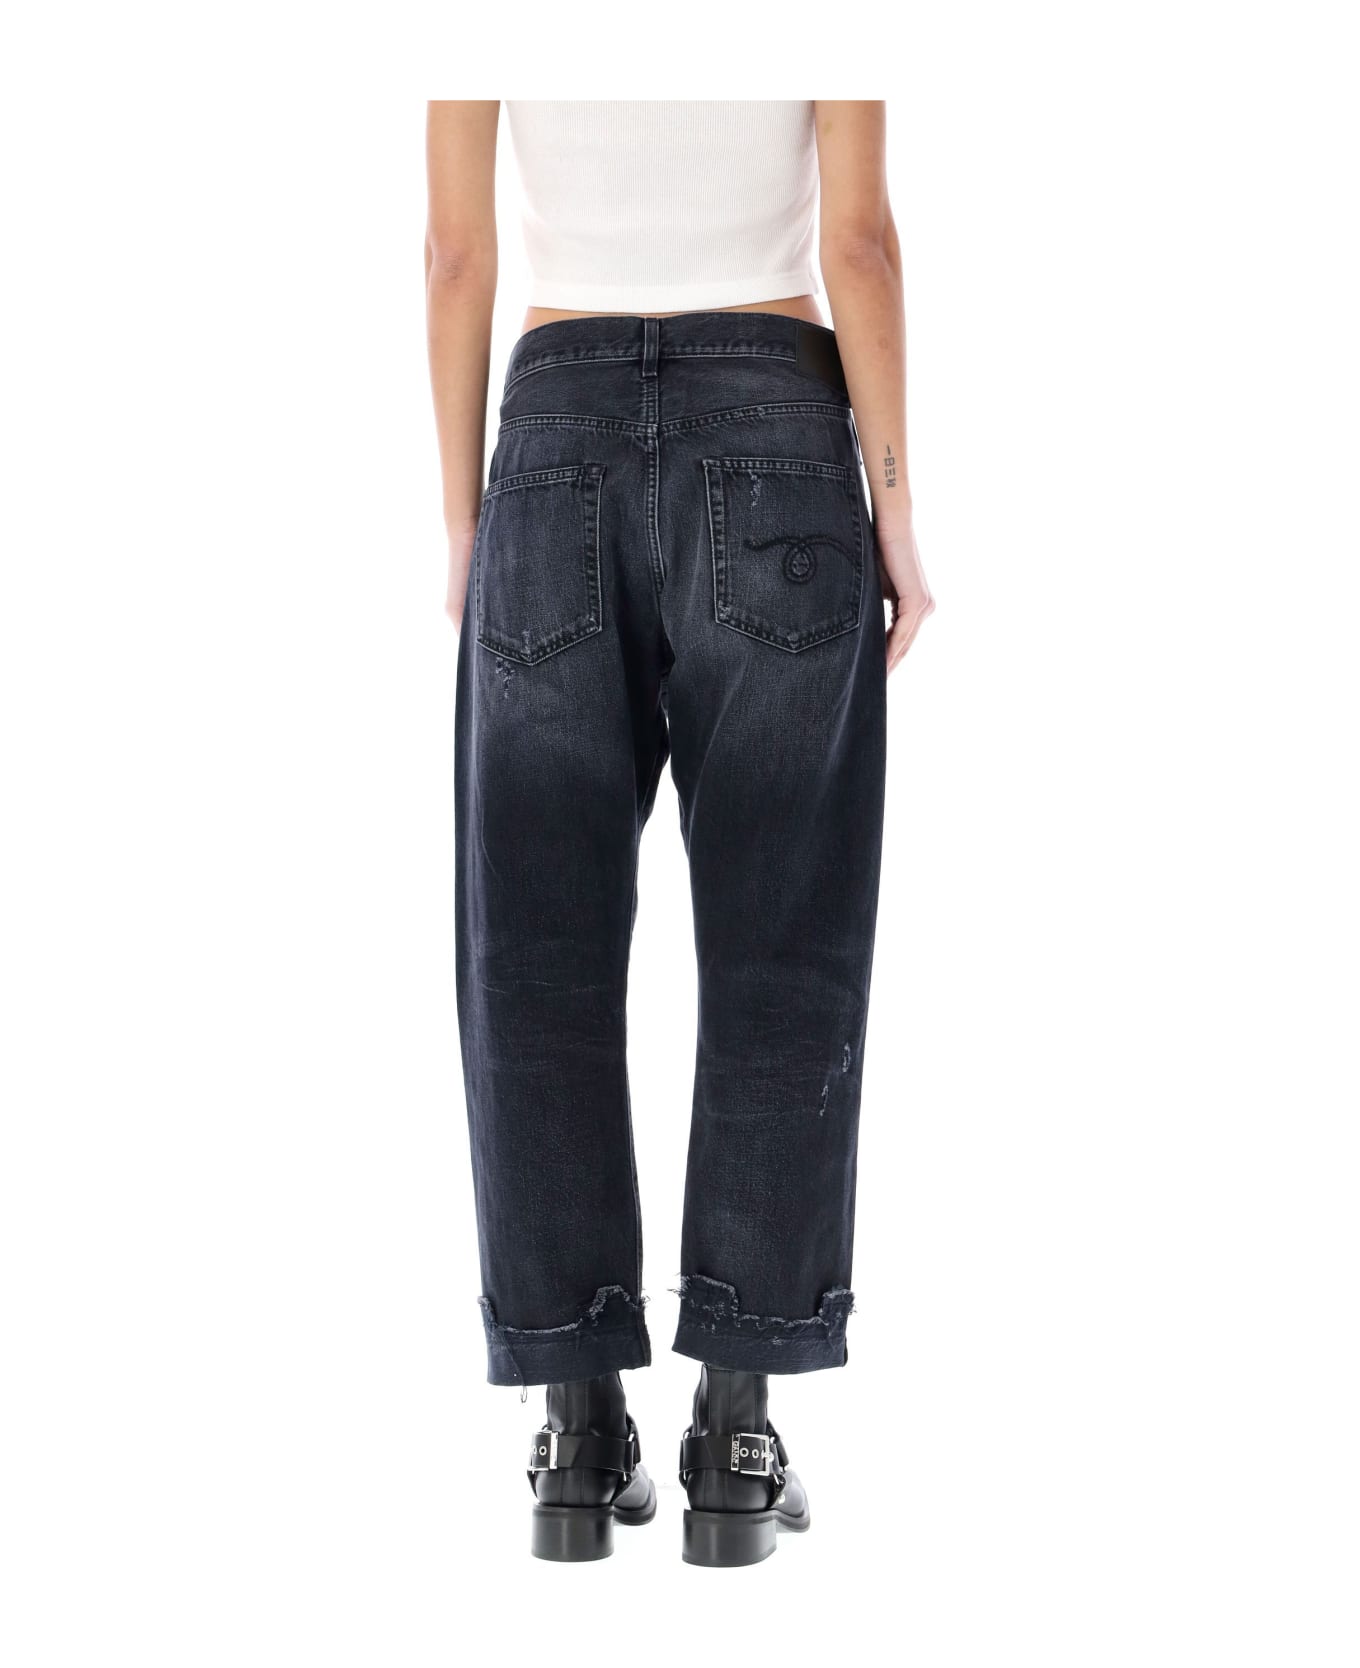 R13 Casual Jeans - JAKE BLACK